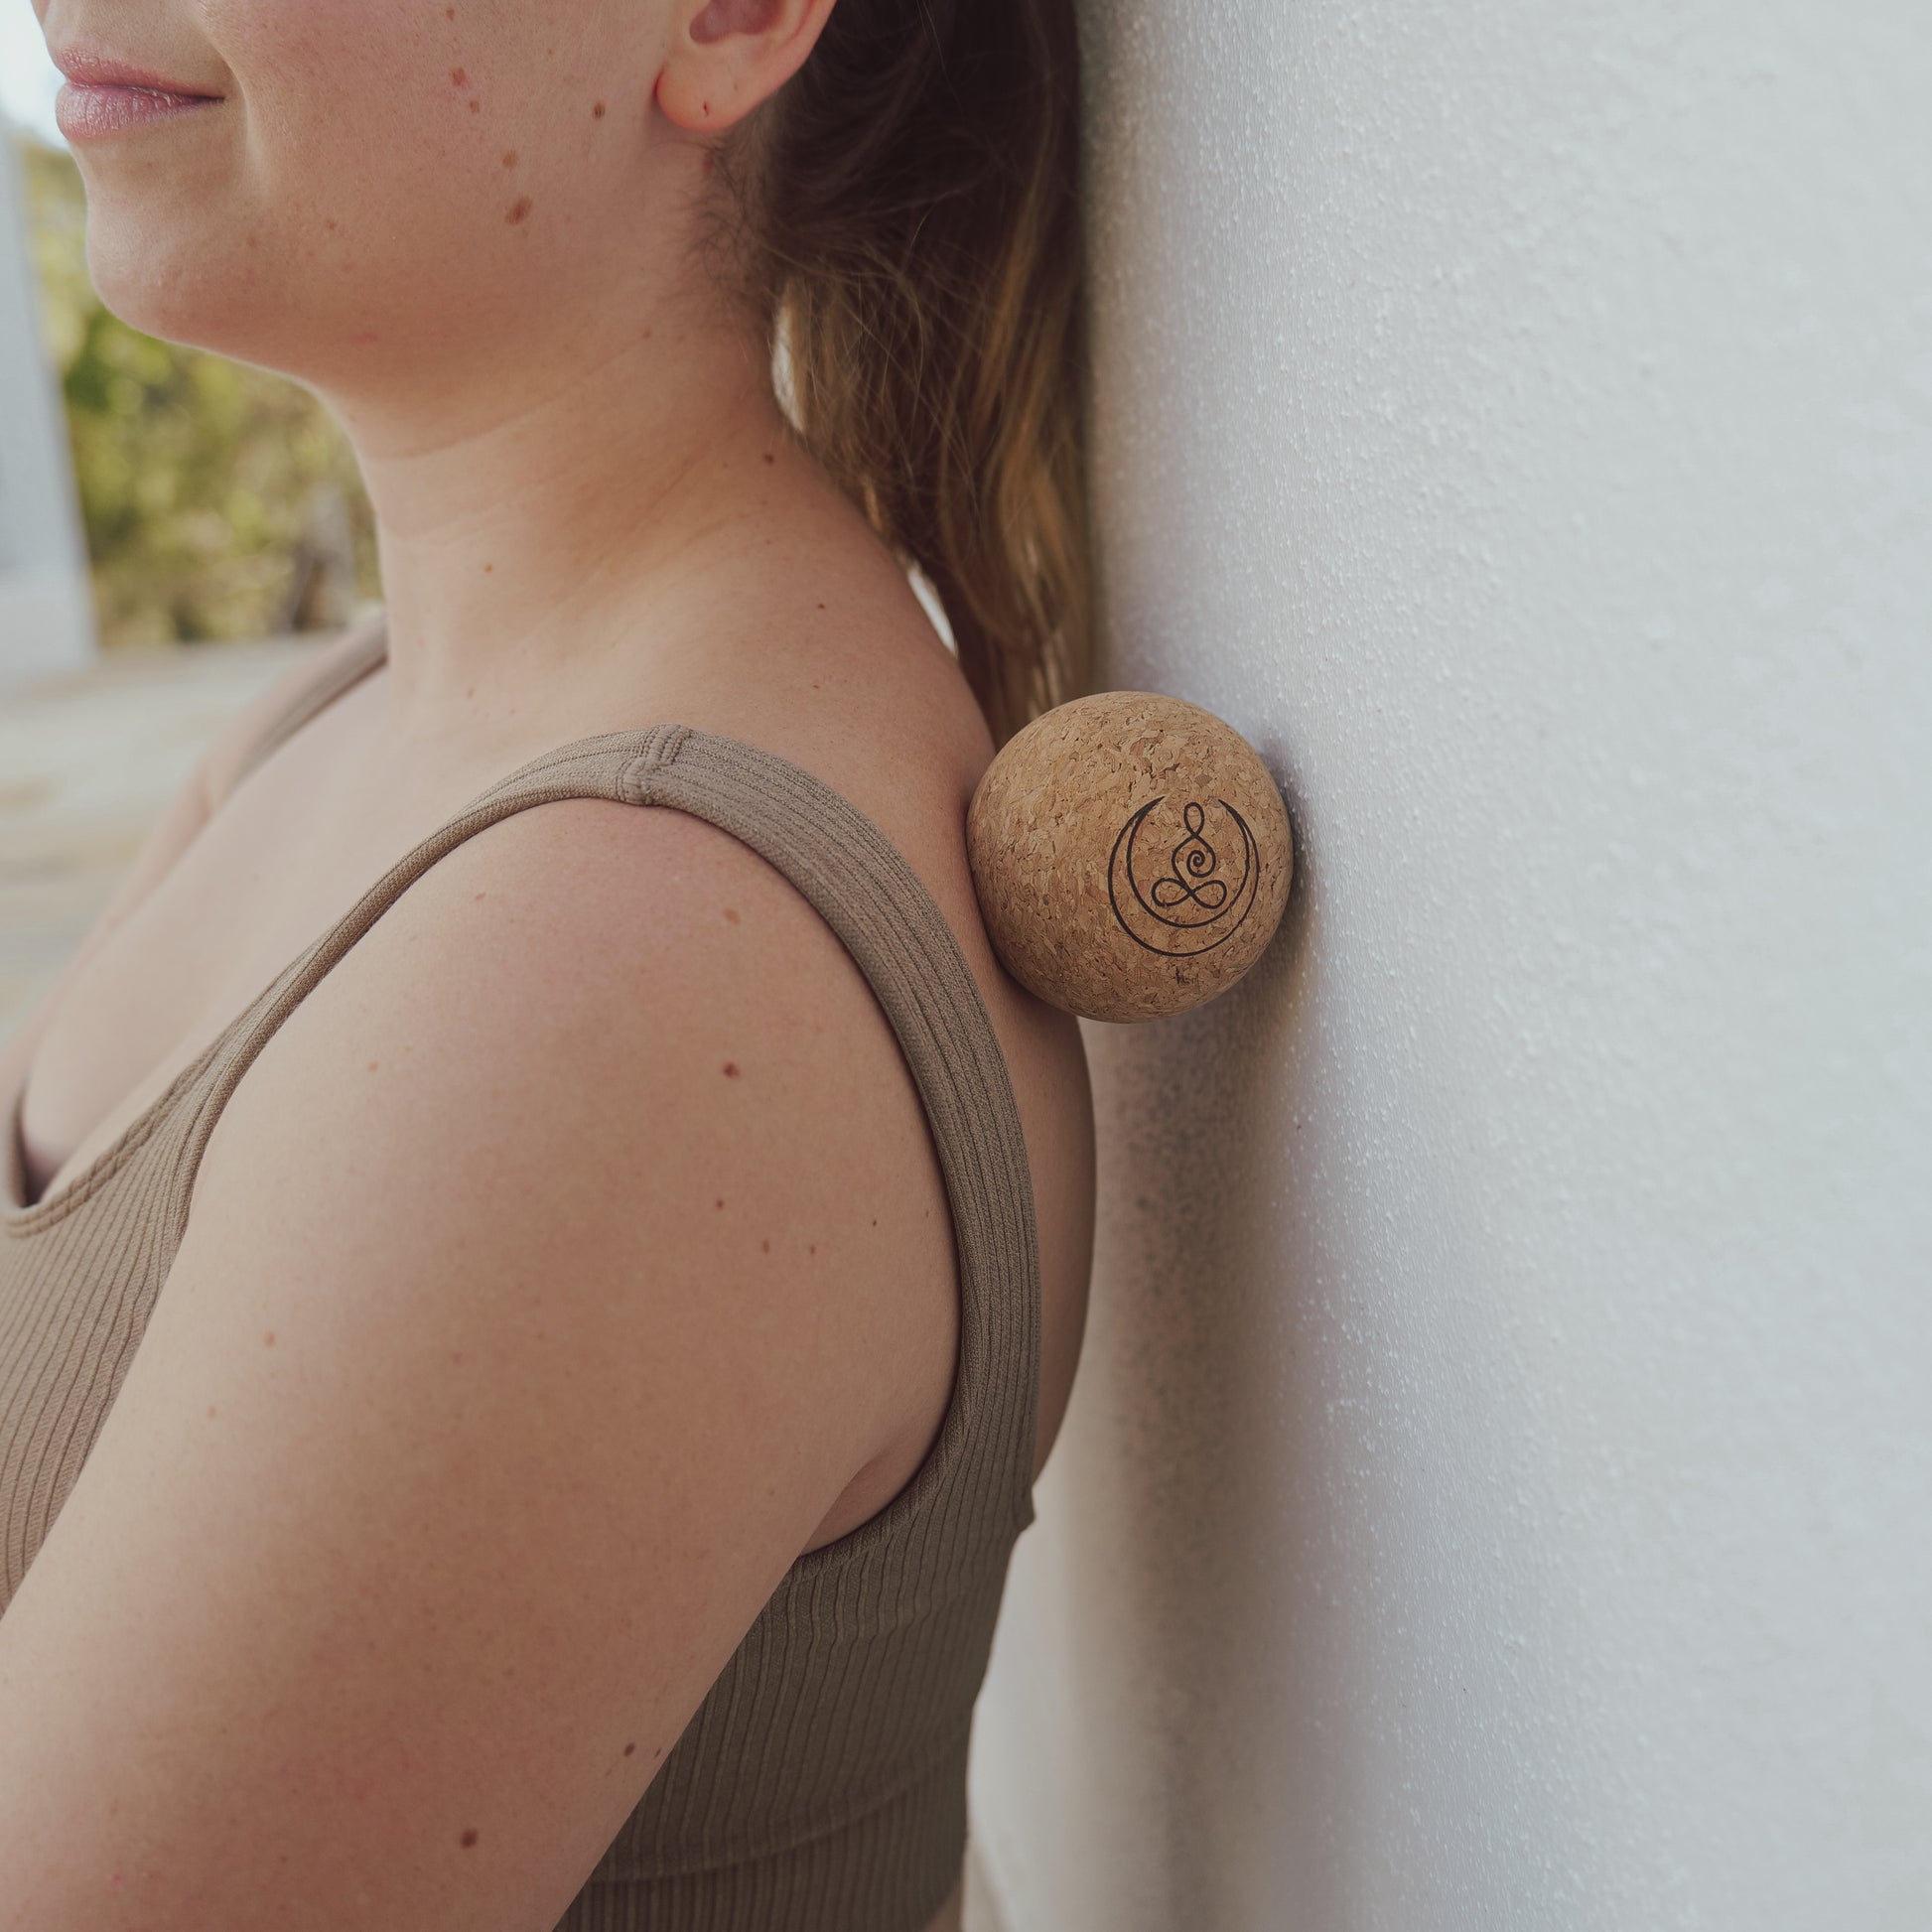 Woman using cork massage balls with OGI NEST logo for back.